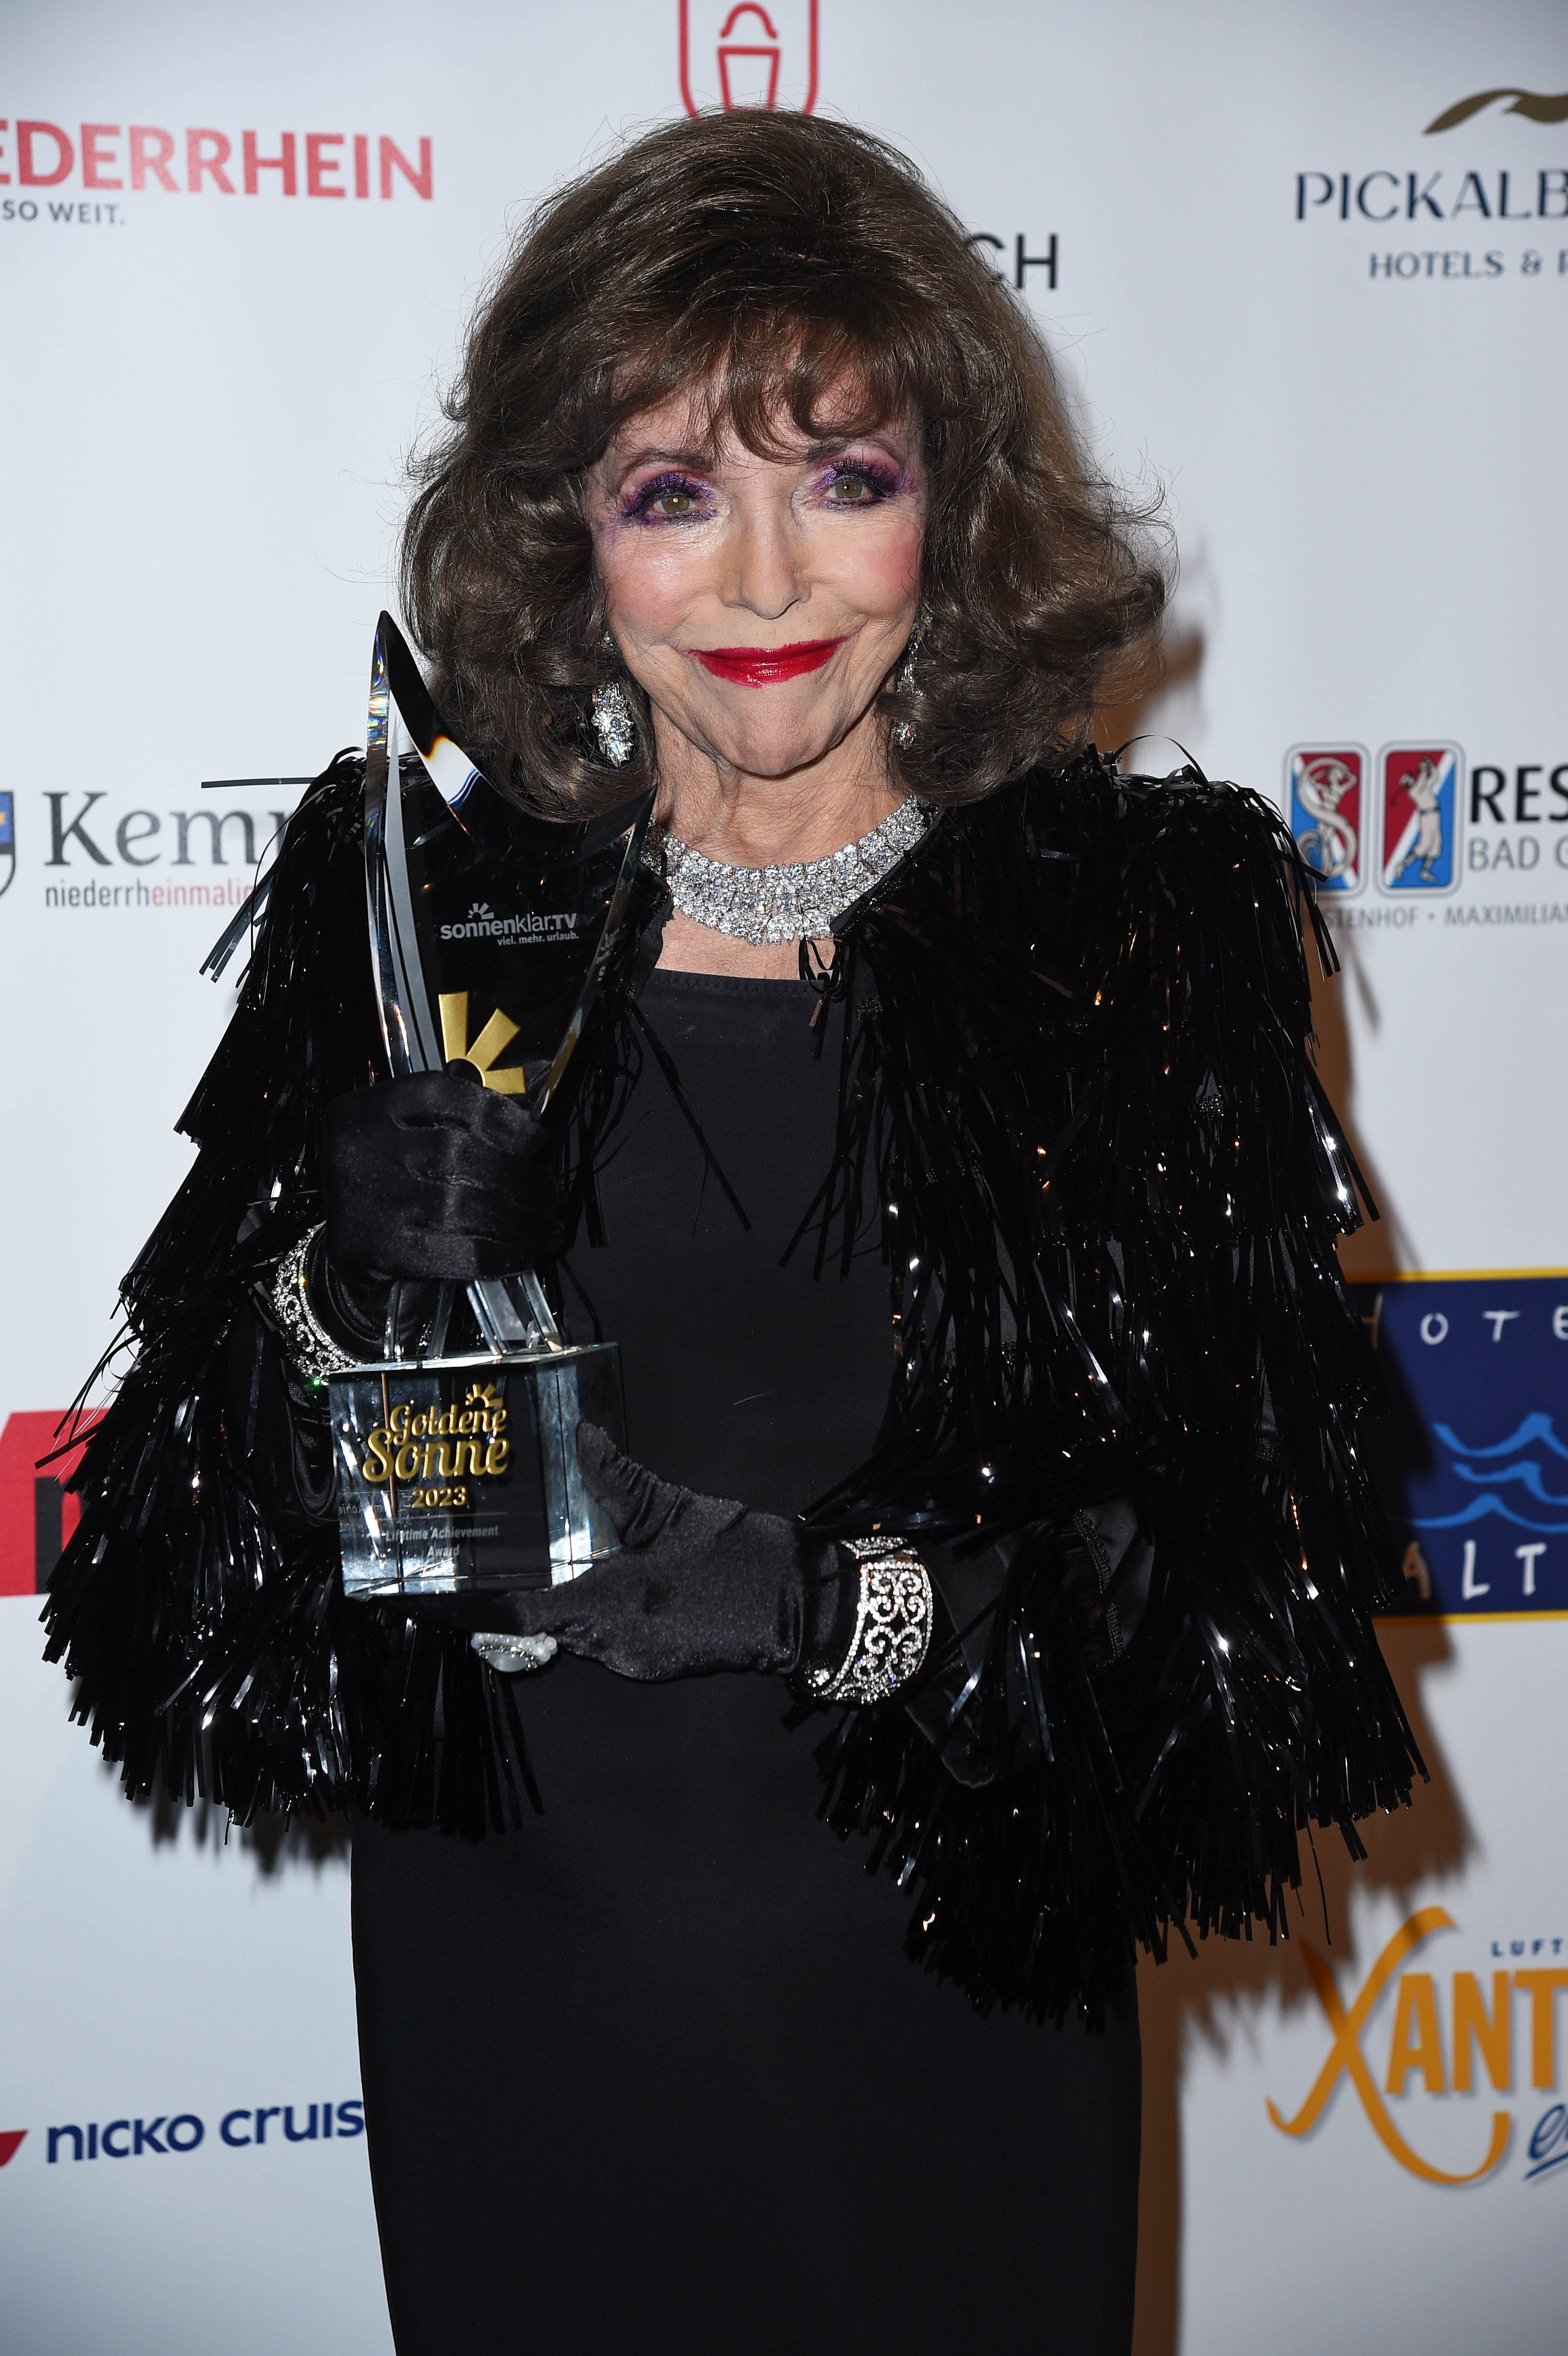 Joan Collins during the Goldene Sonne Award 2023" on April 22, 2023 in Kalkar, Germany Source: Getty Images